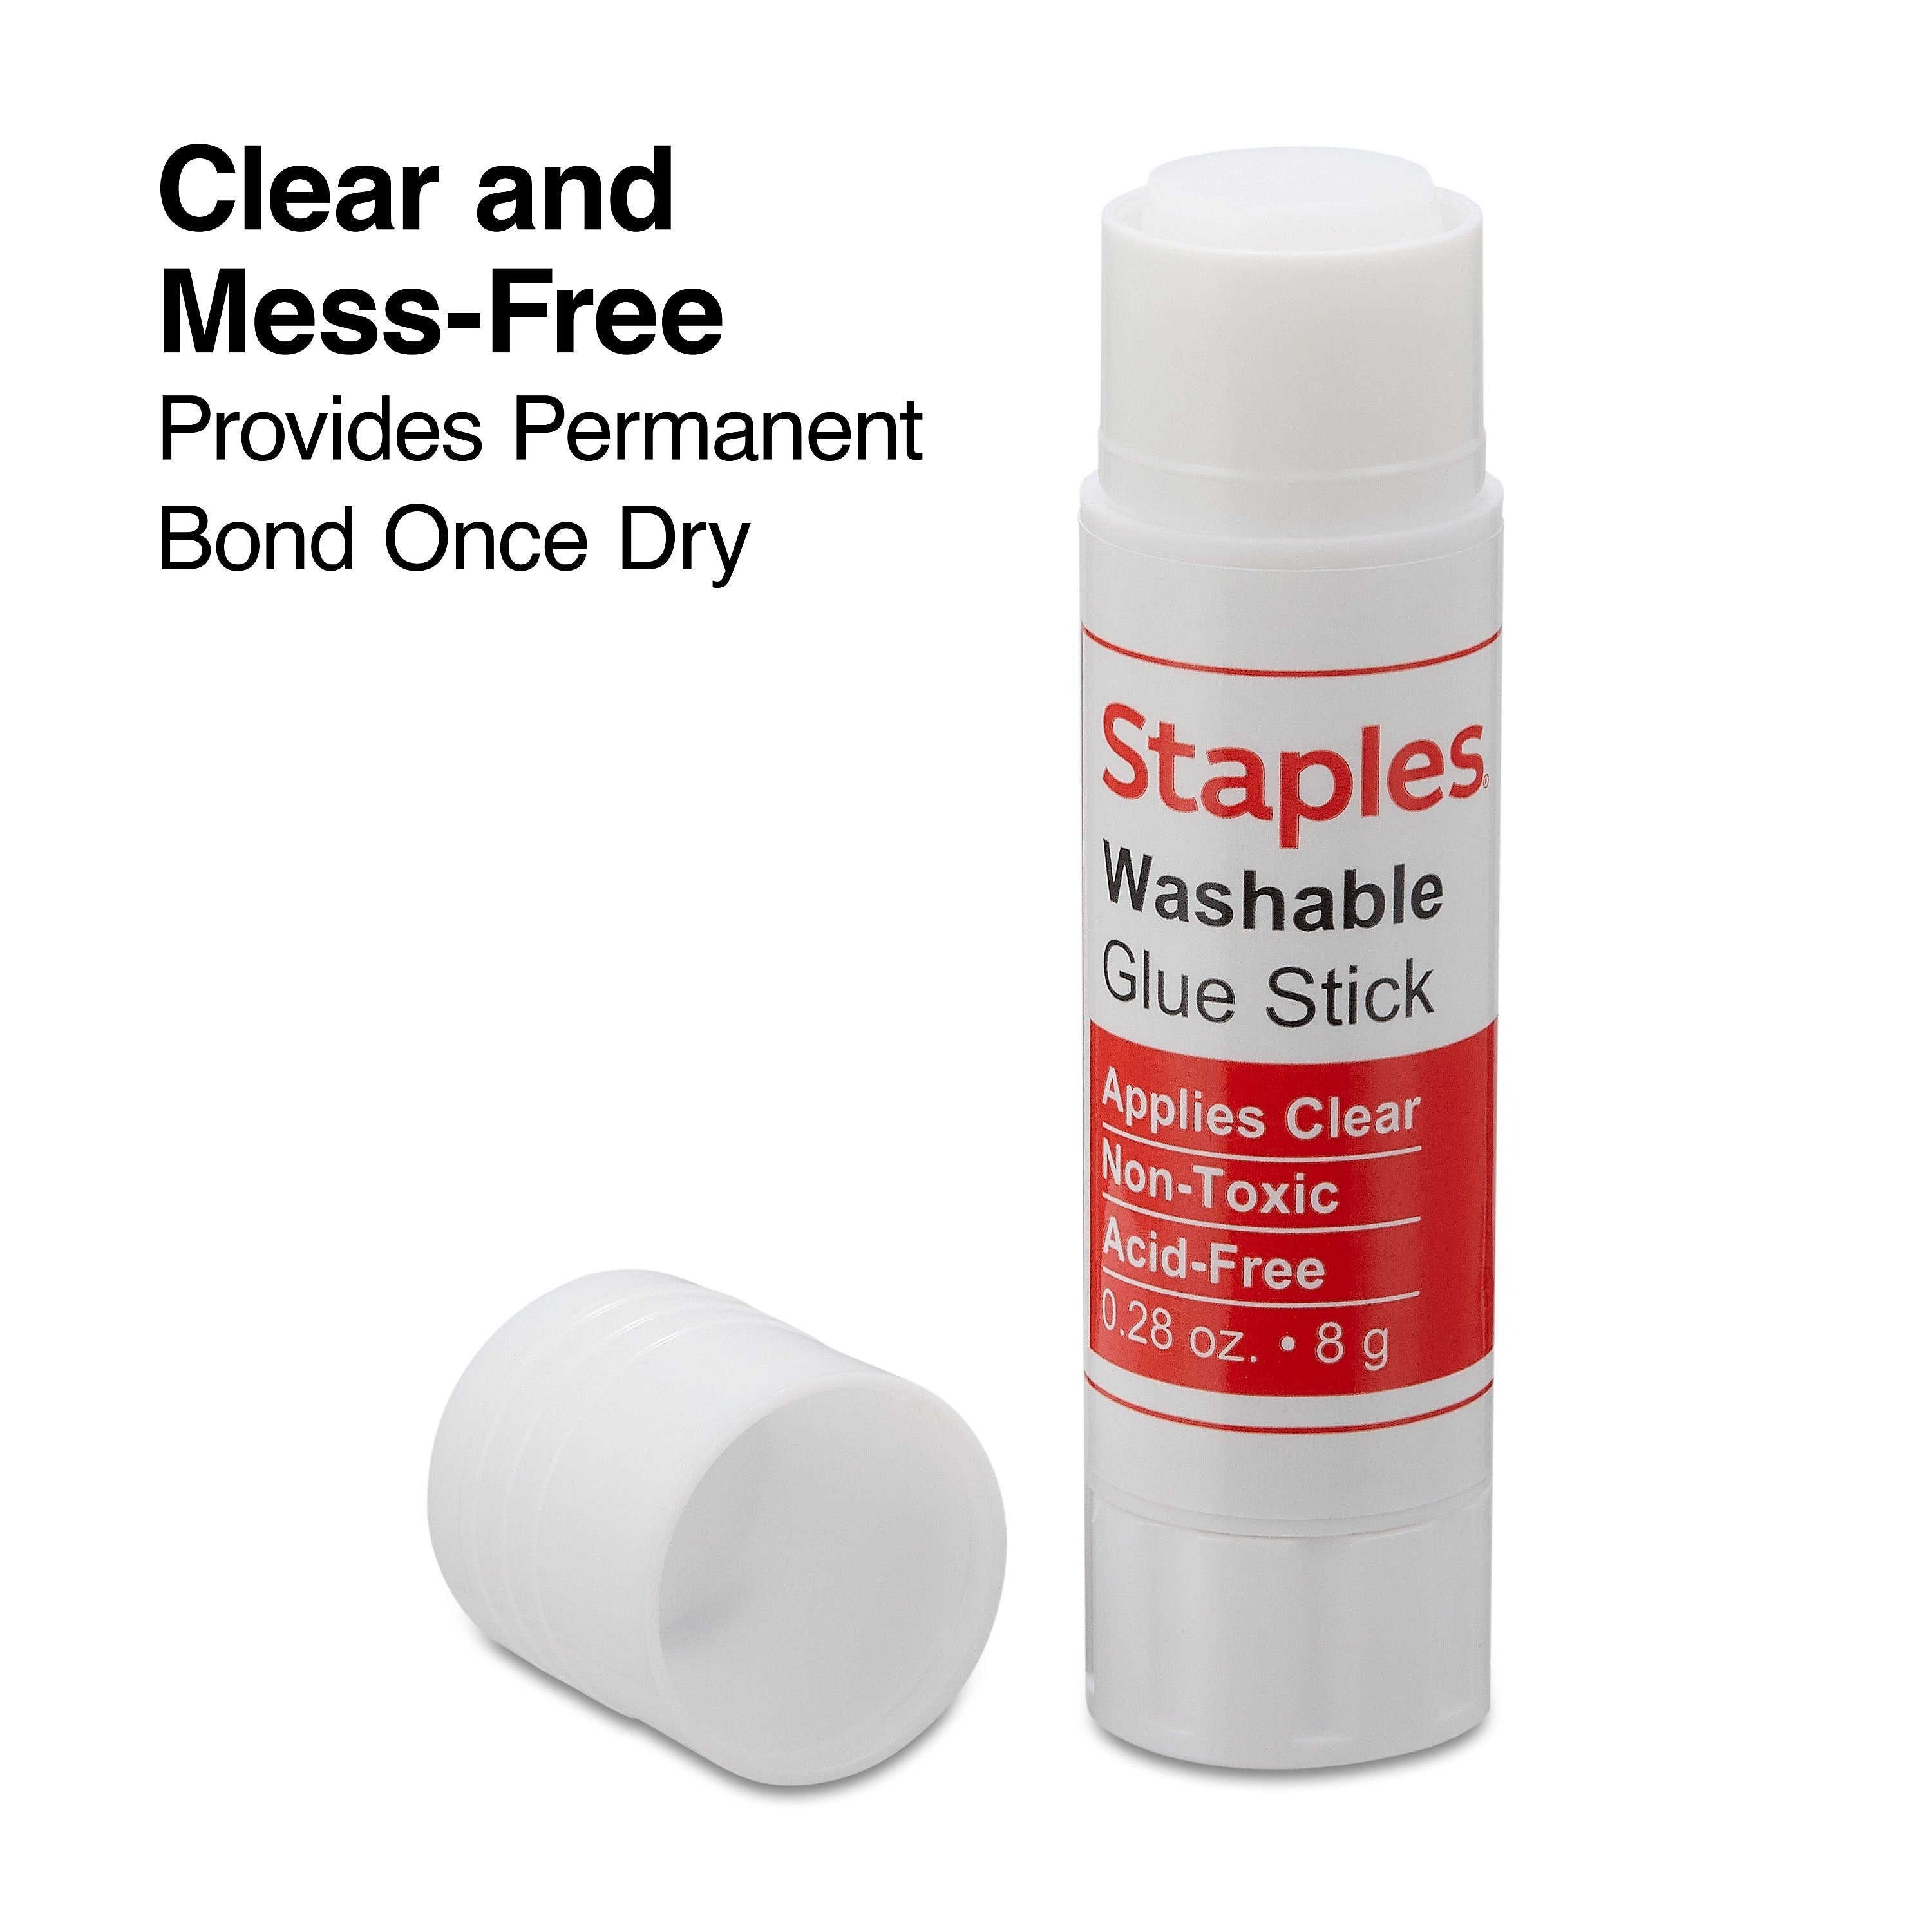 Staples Washable Glue Sticks, 0.28 oz., 4/Pack